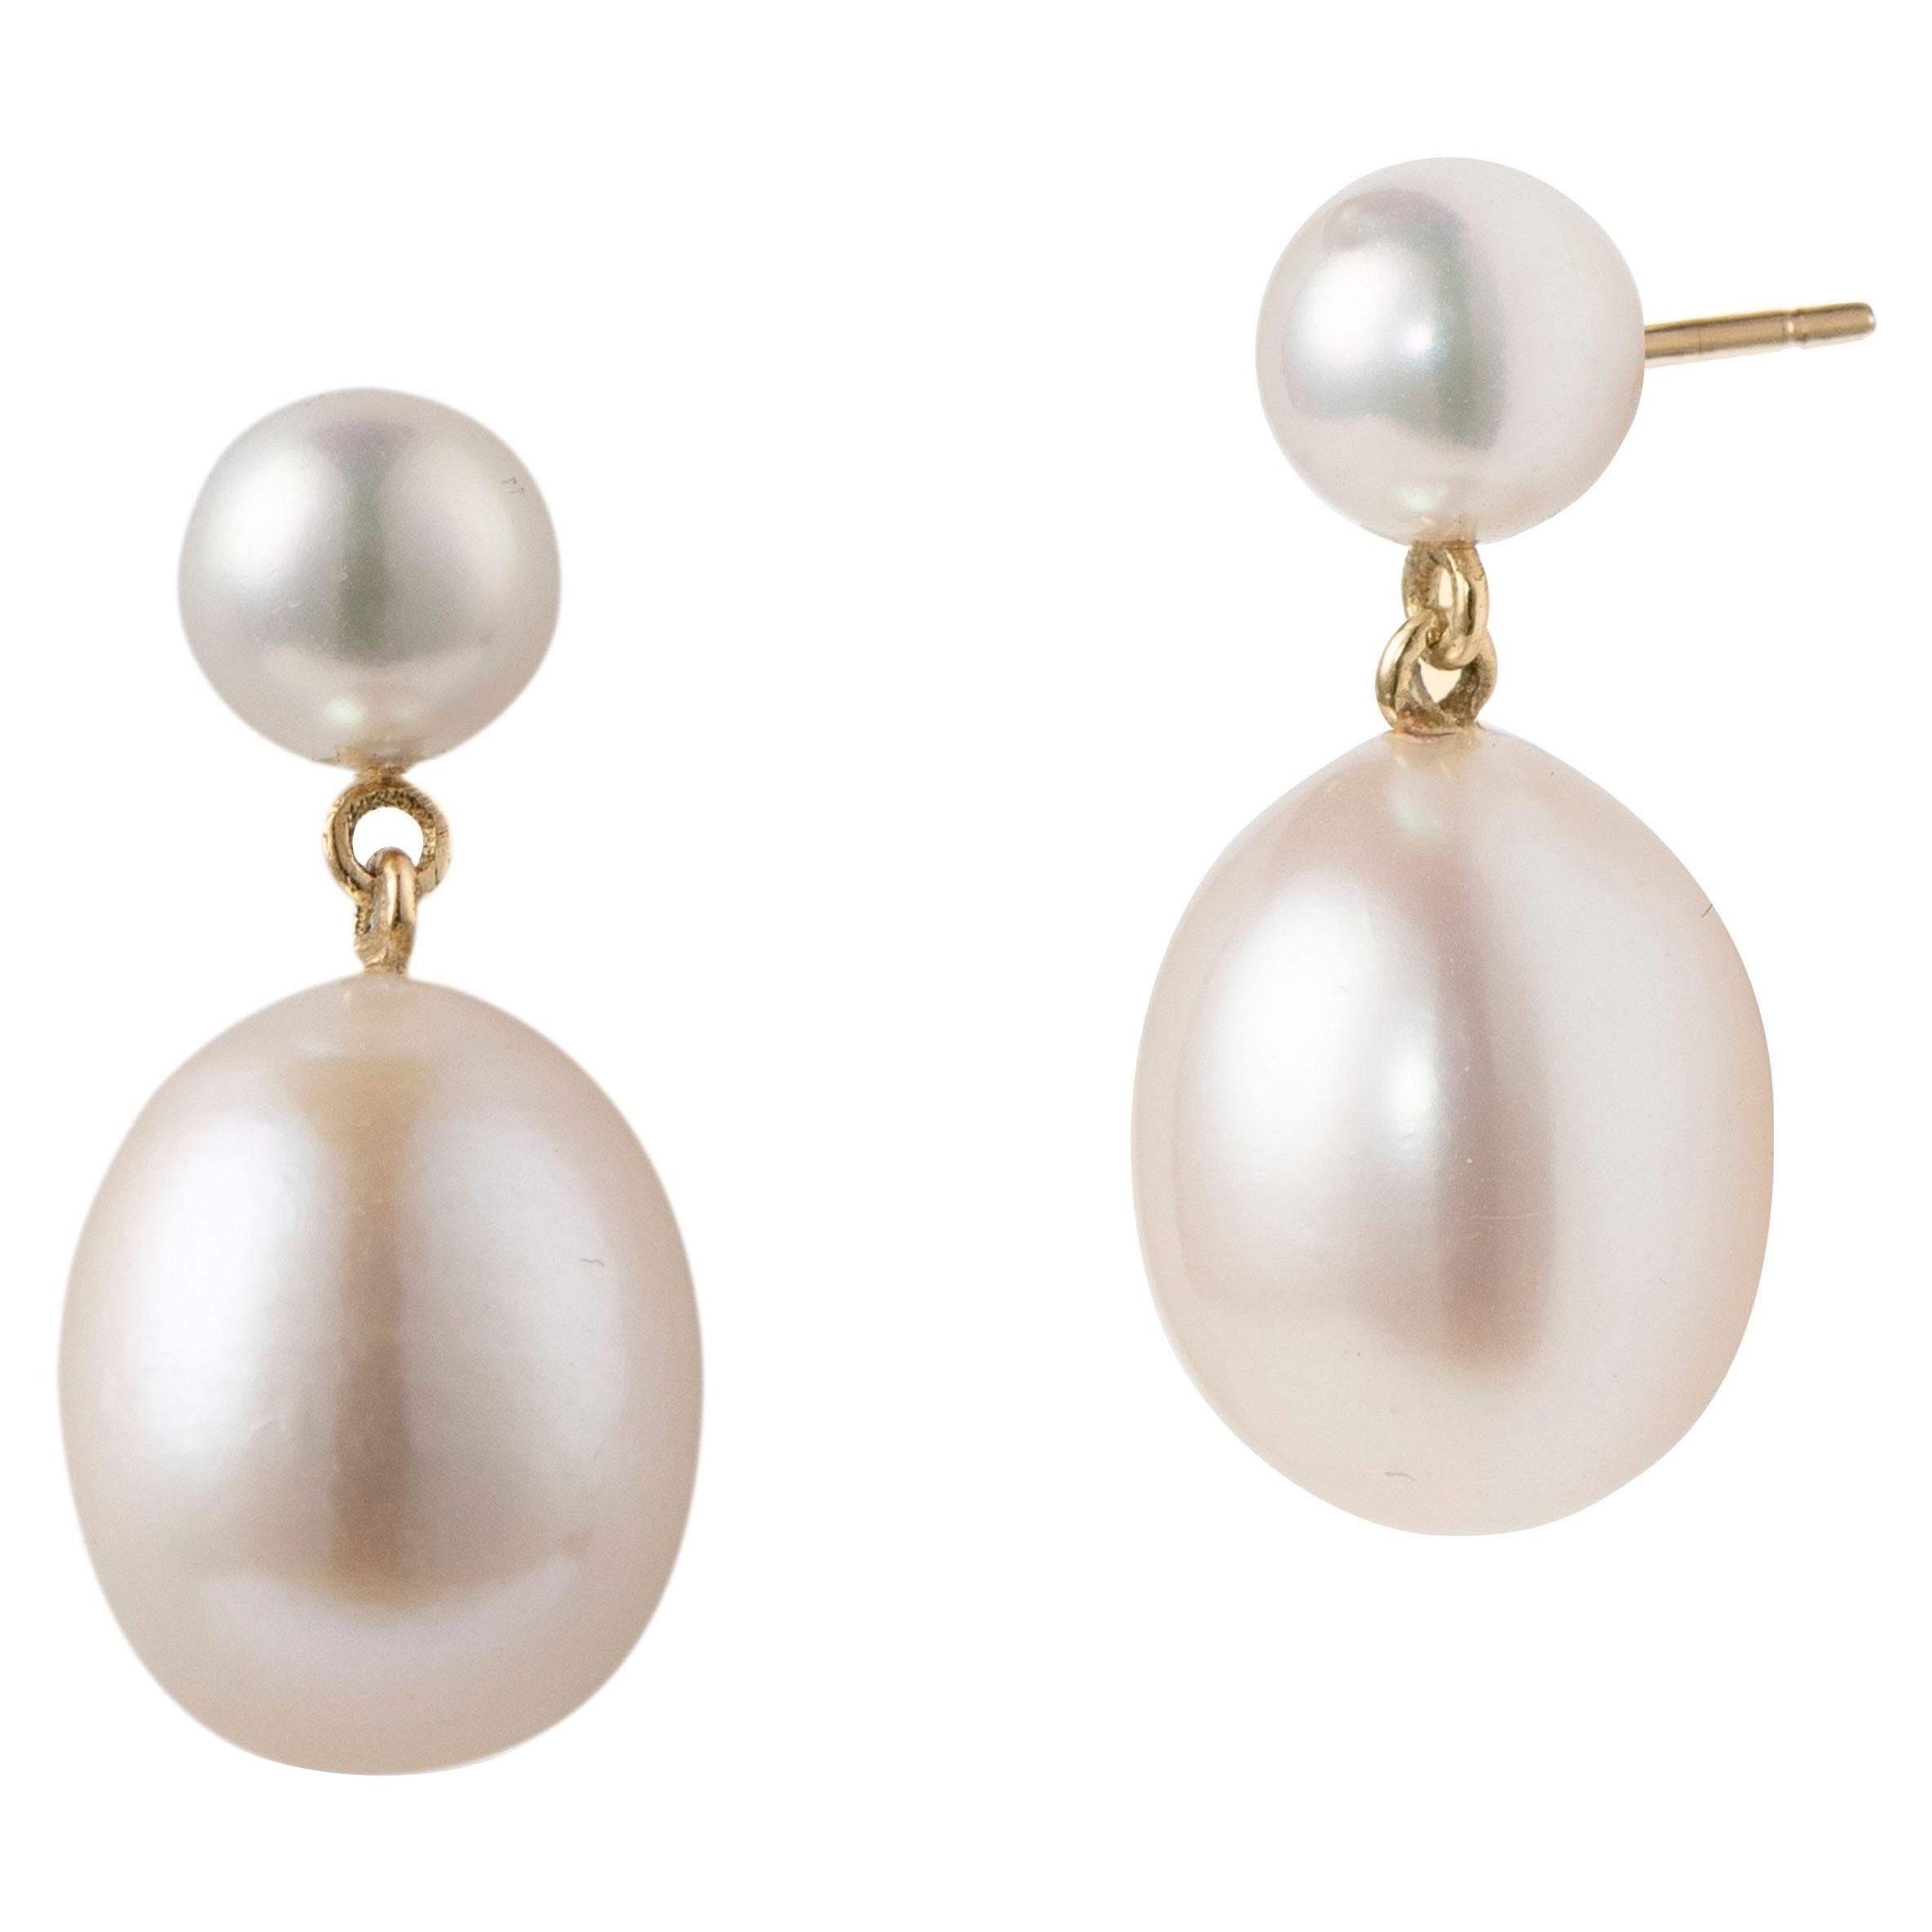 Double Drops Pearl Earrings, 18K Gold, by Michelle Massoura